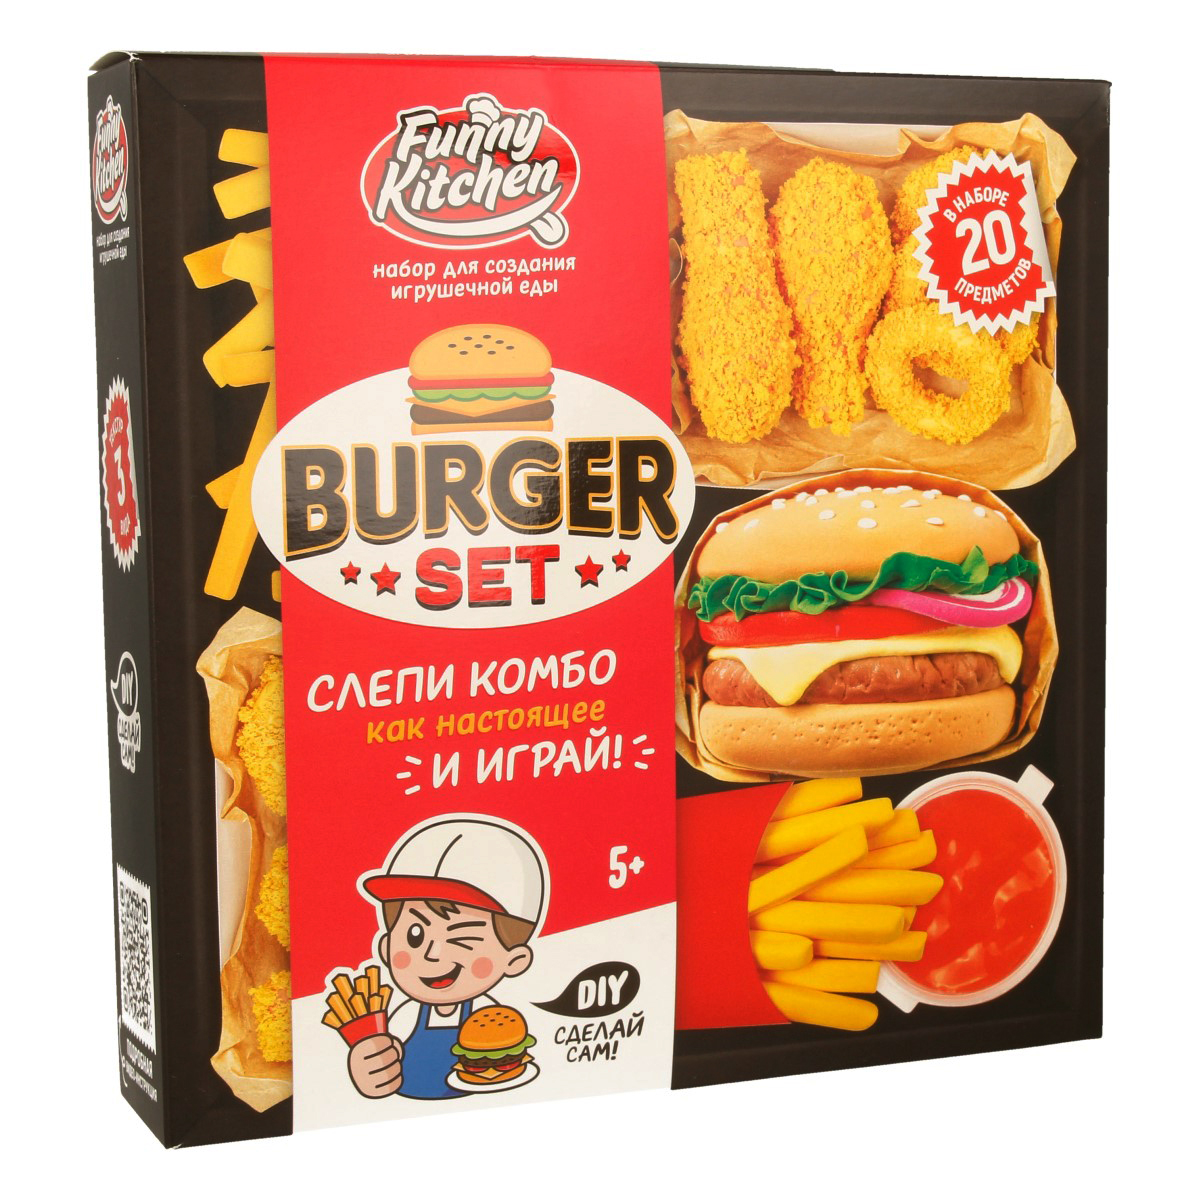 Набор для опытов Funny Kitchen "Burger set" 150 гр, легкий пластилин, слайм, тесто